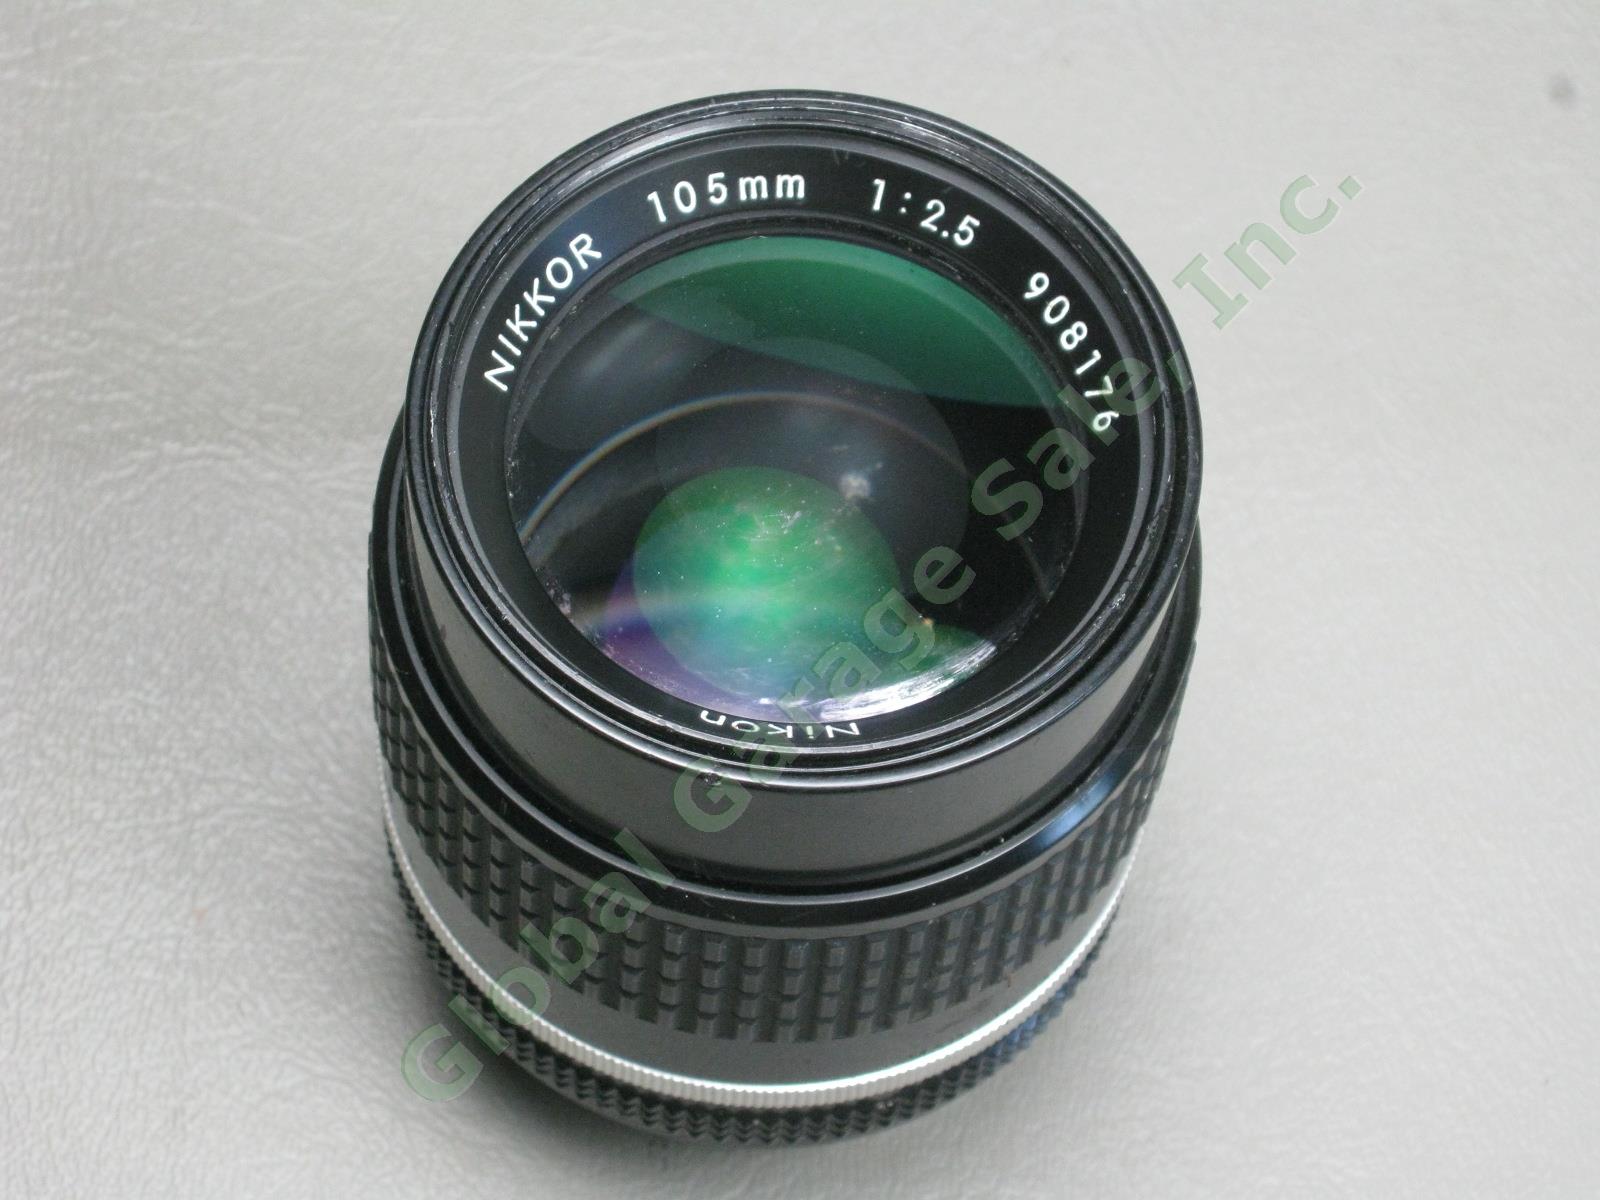 Nikon Nikkor 105mm 1:2.5 f/2.5 Telephoto Camera Lens No Reserve Price! 3